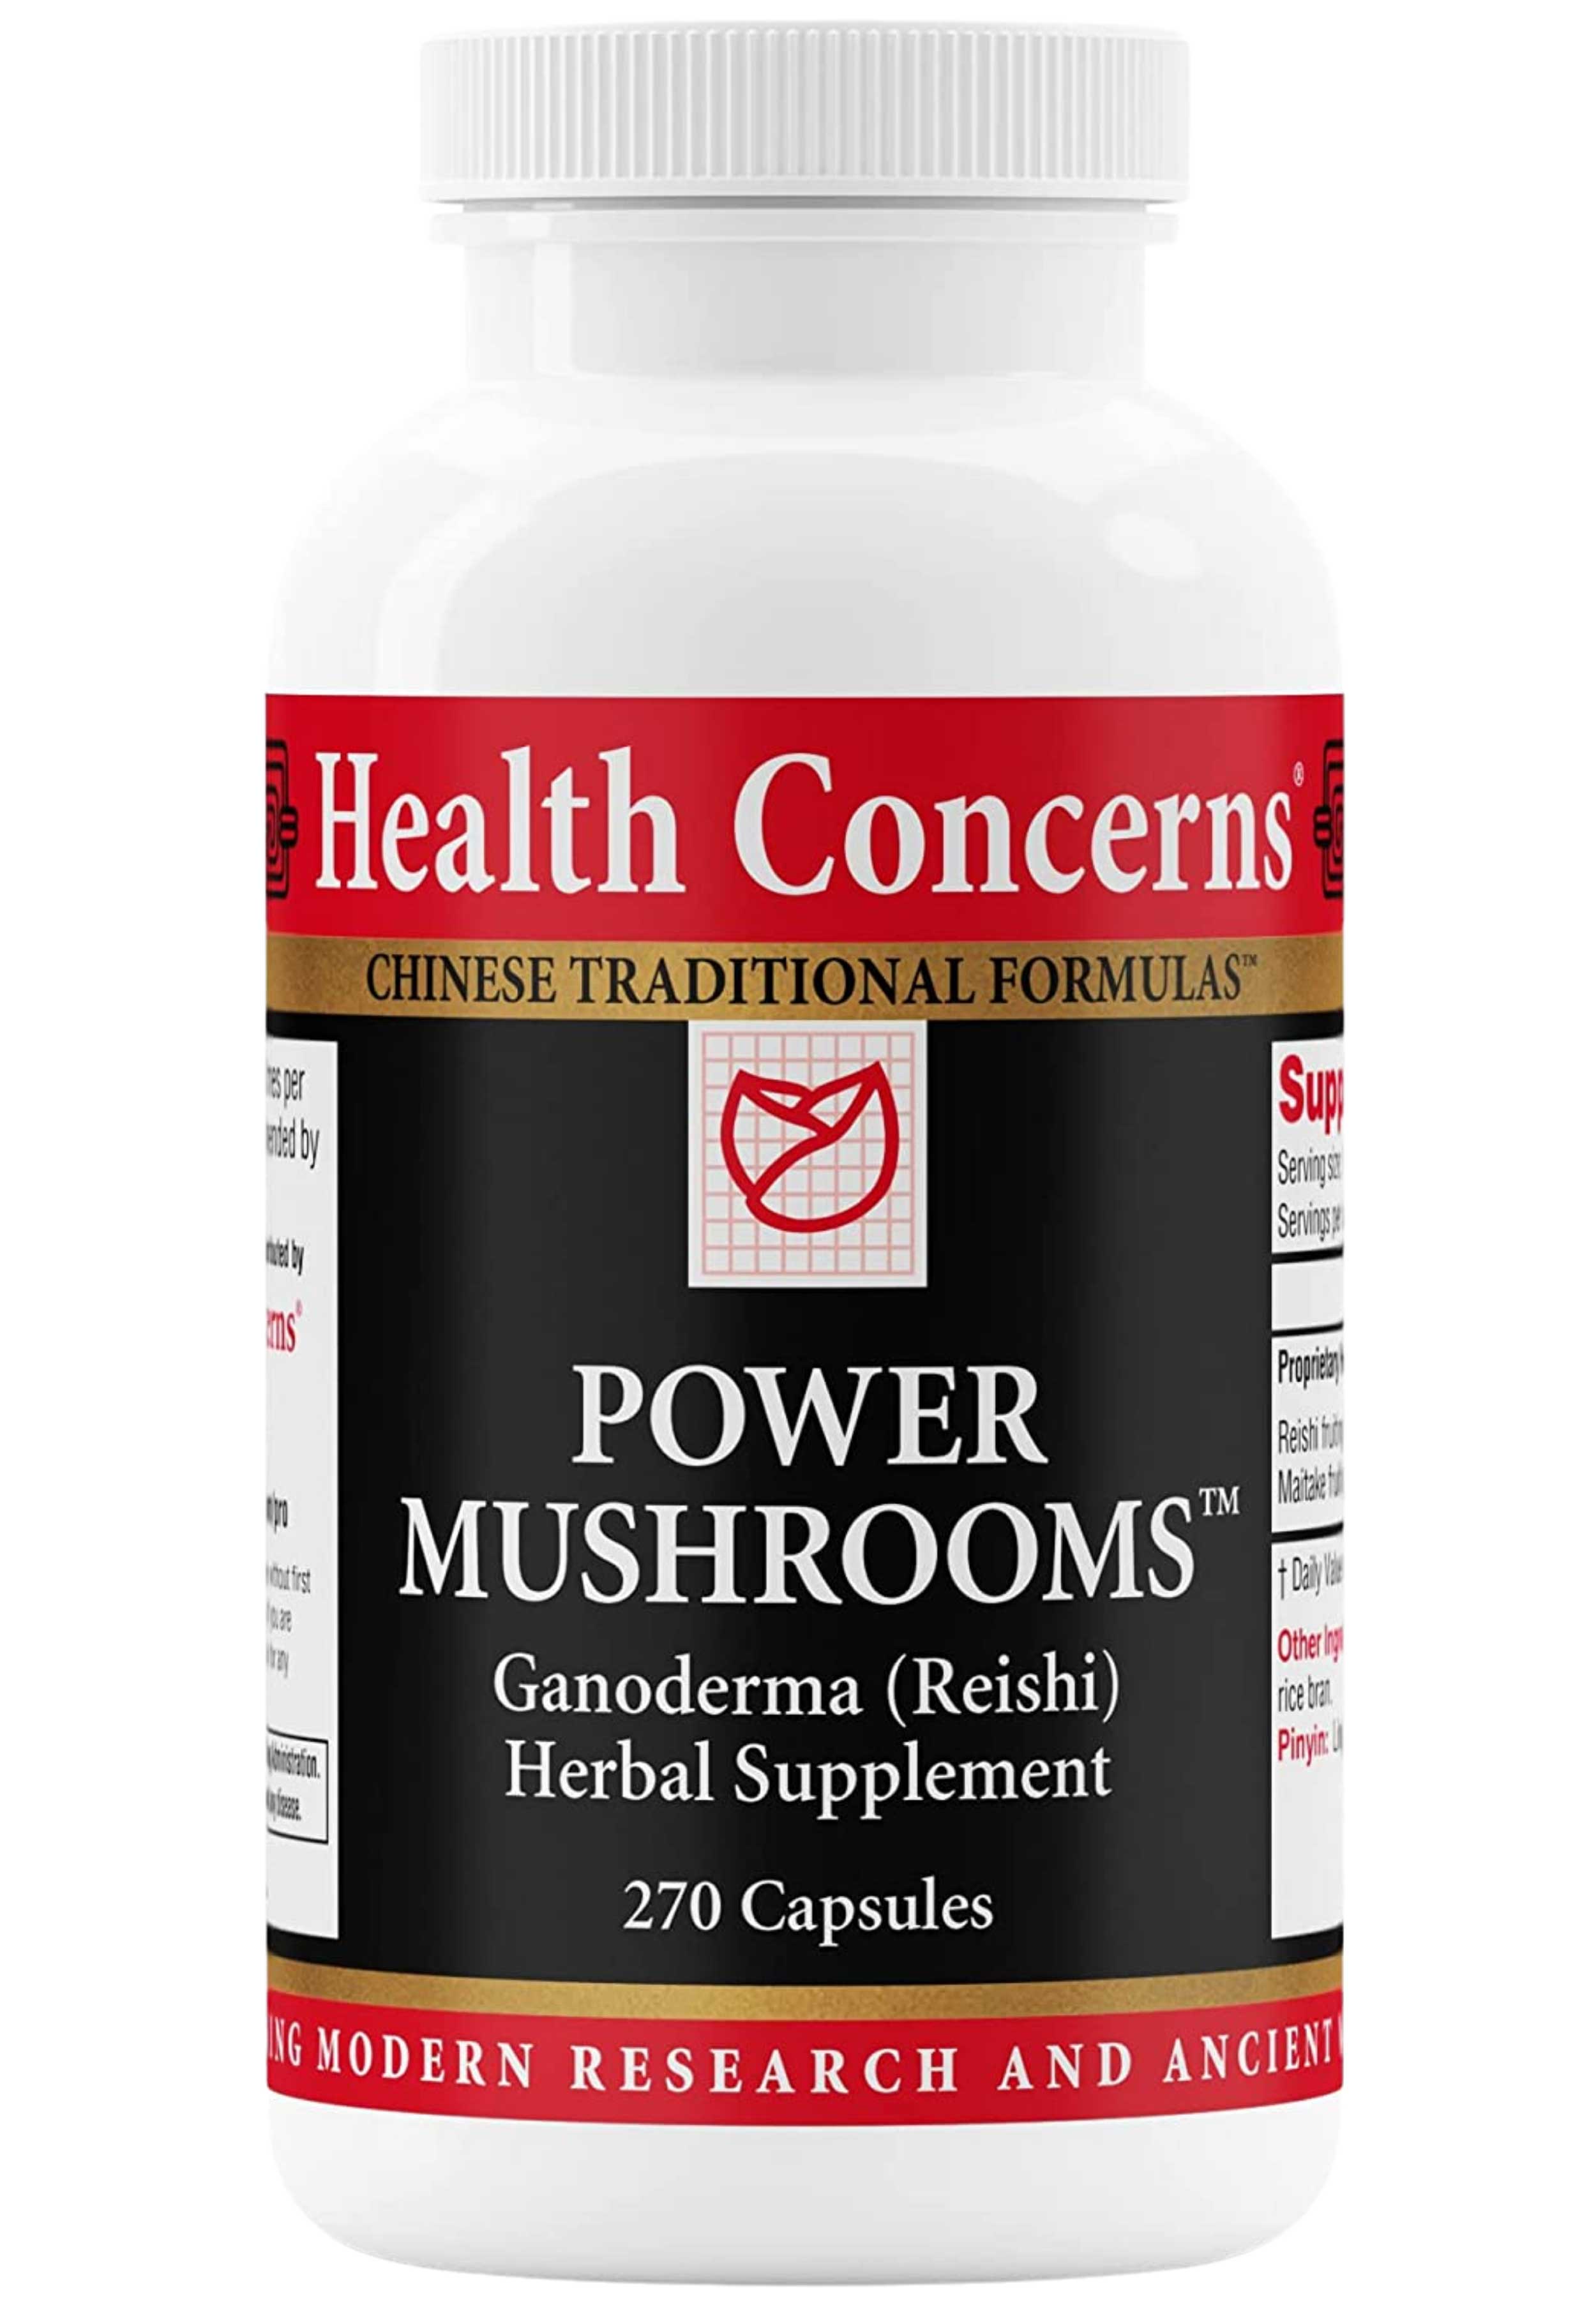 Health Concerns Power Mushrooms